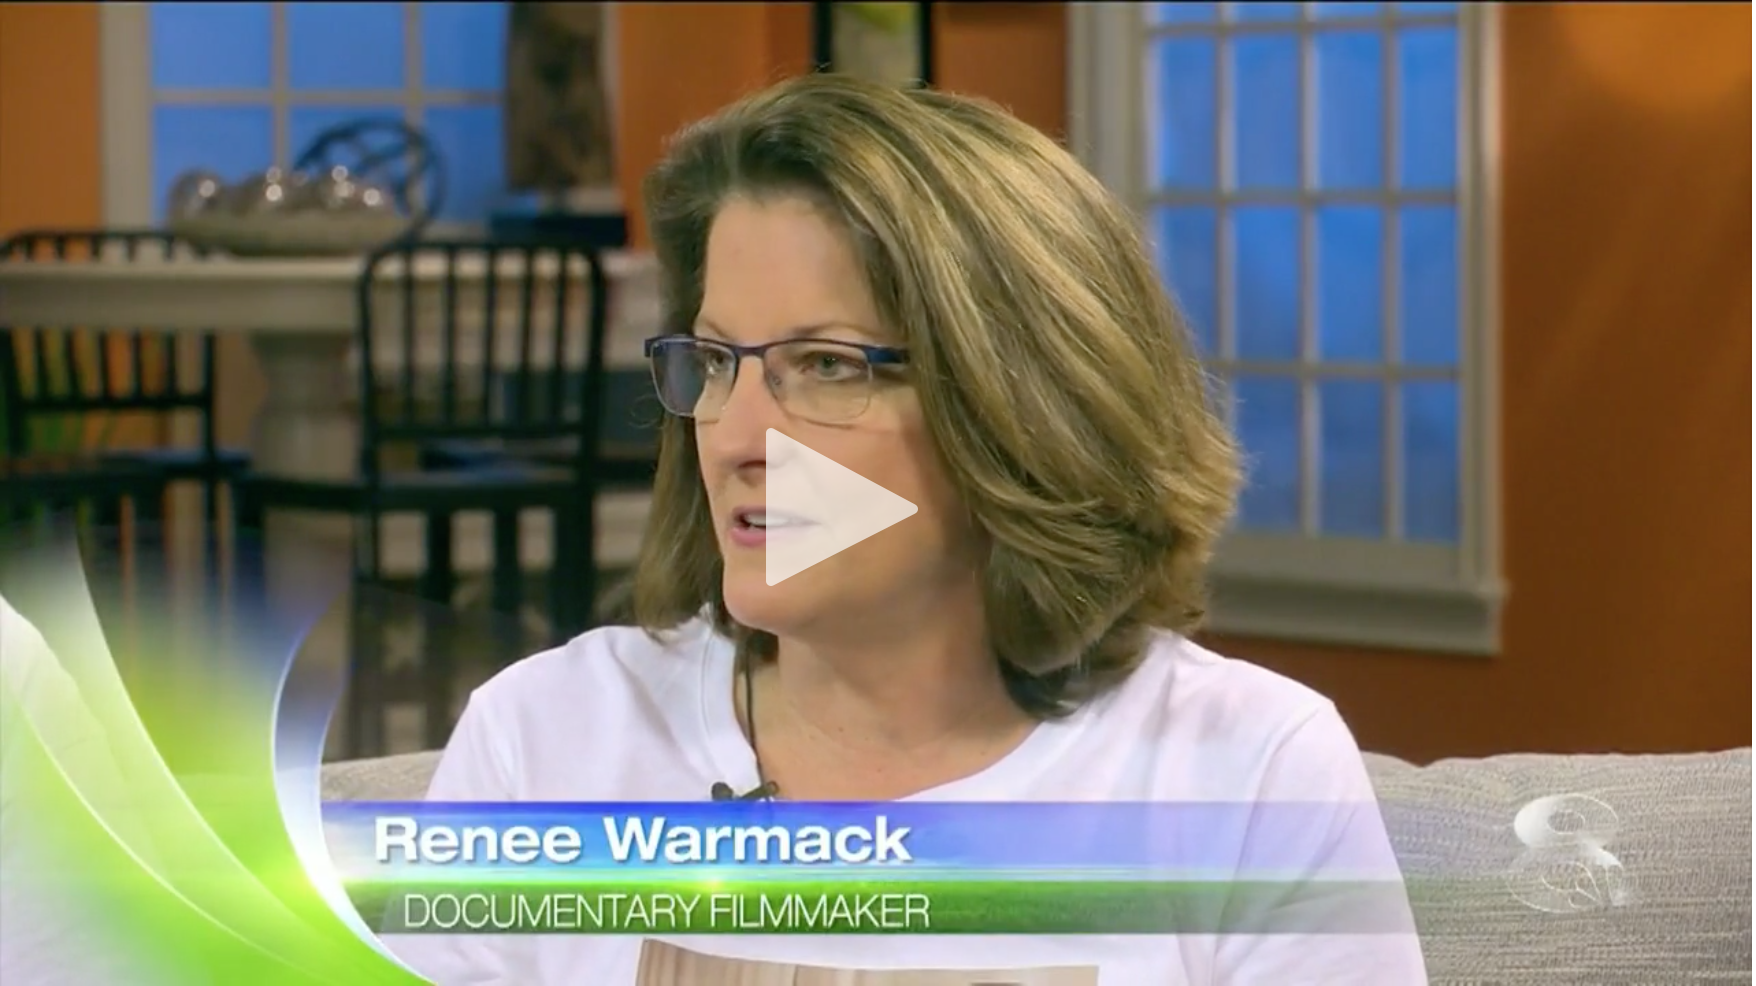 Renee Warmack TV interview about filmmaking